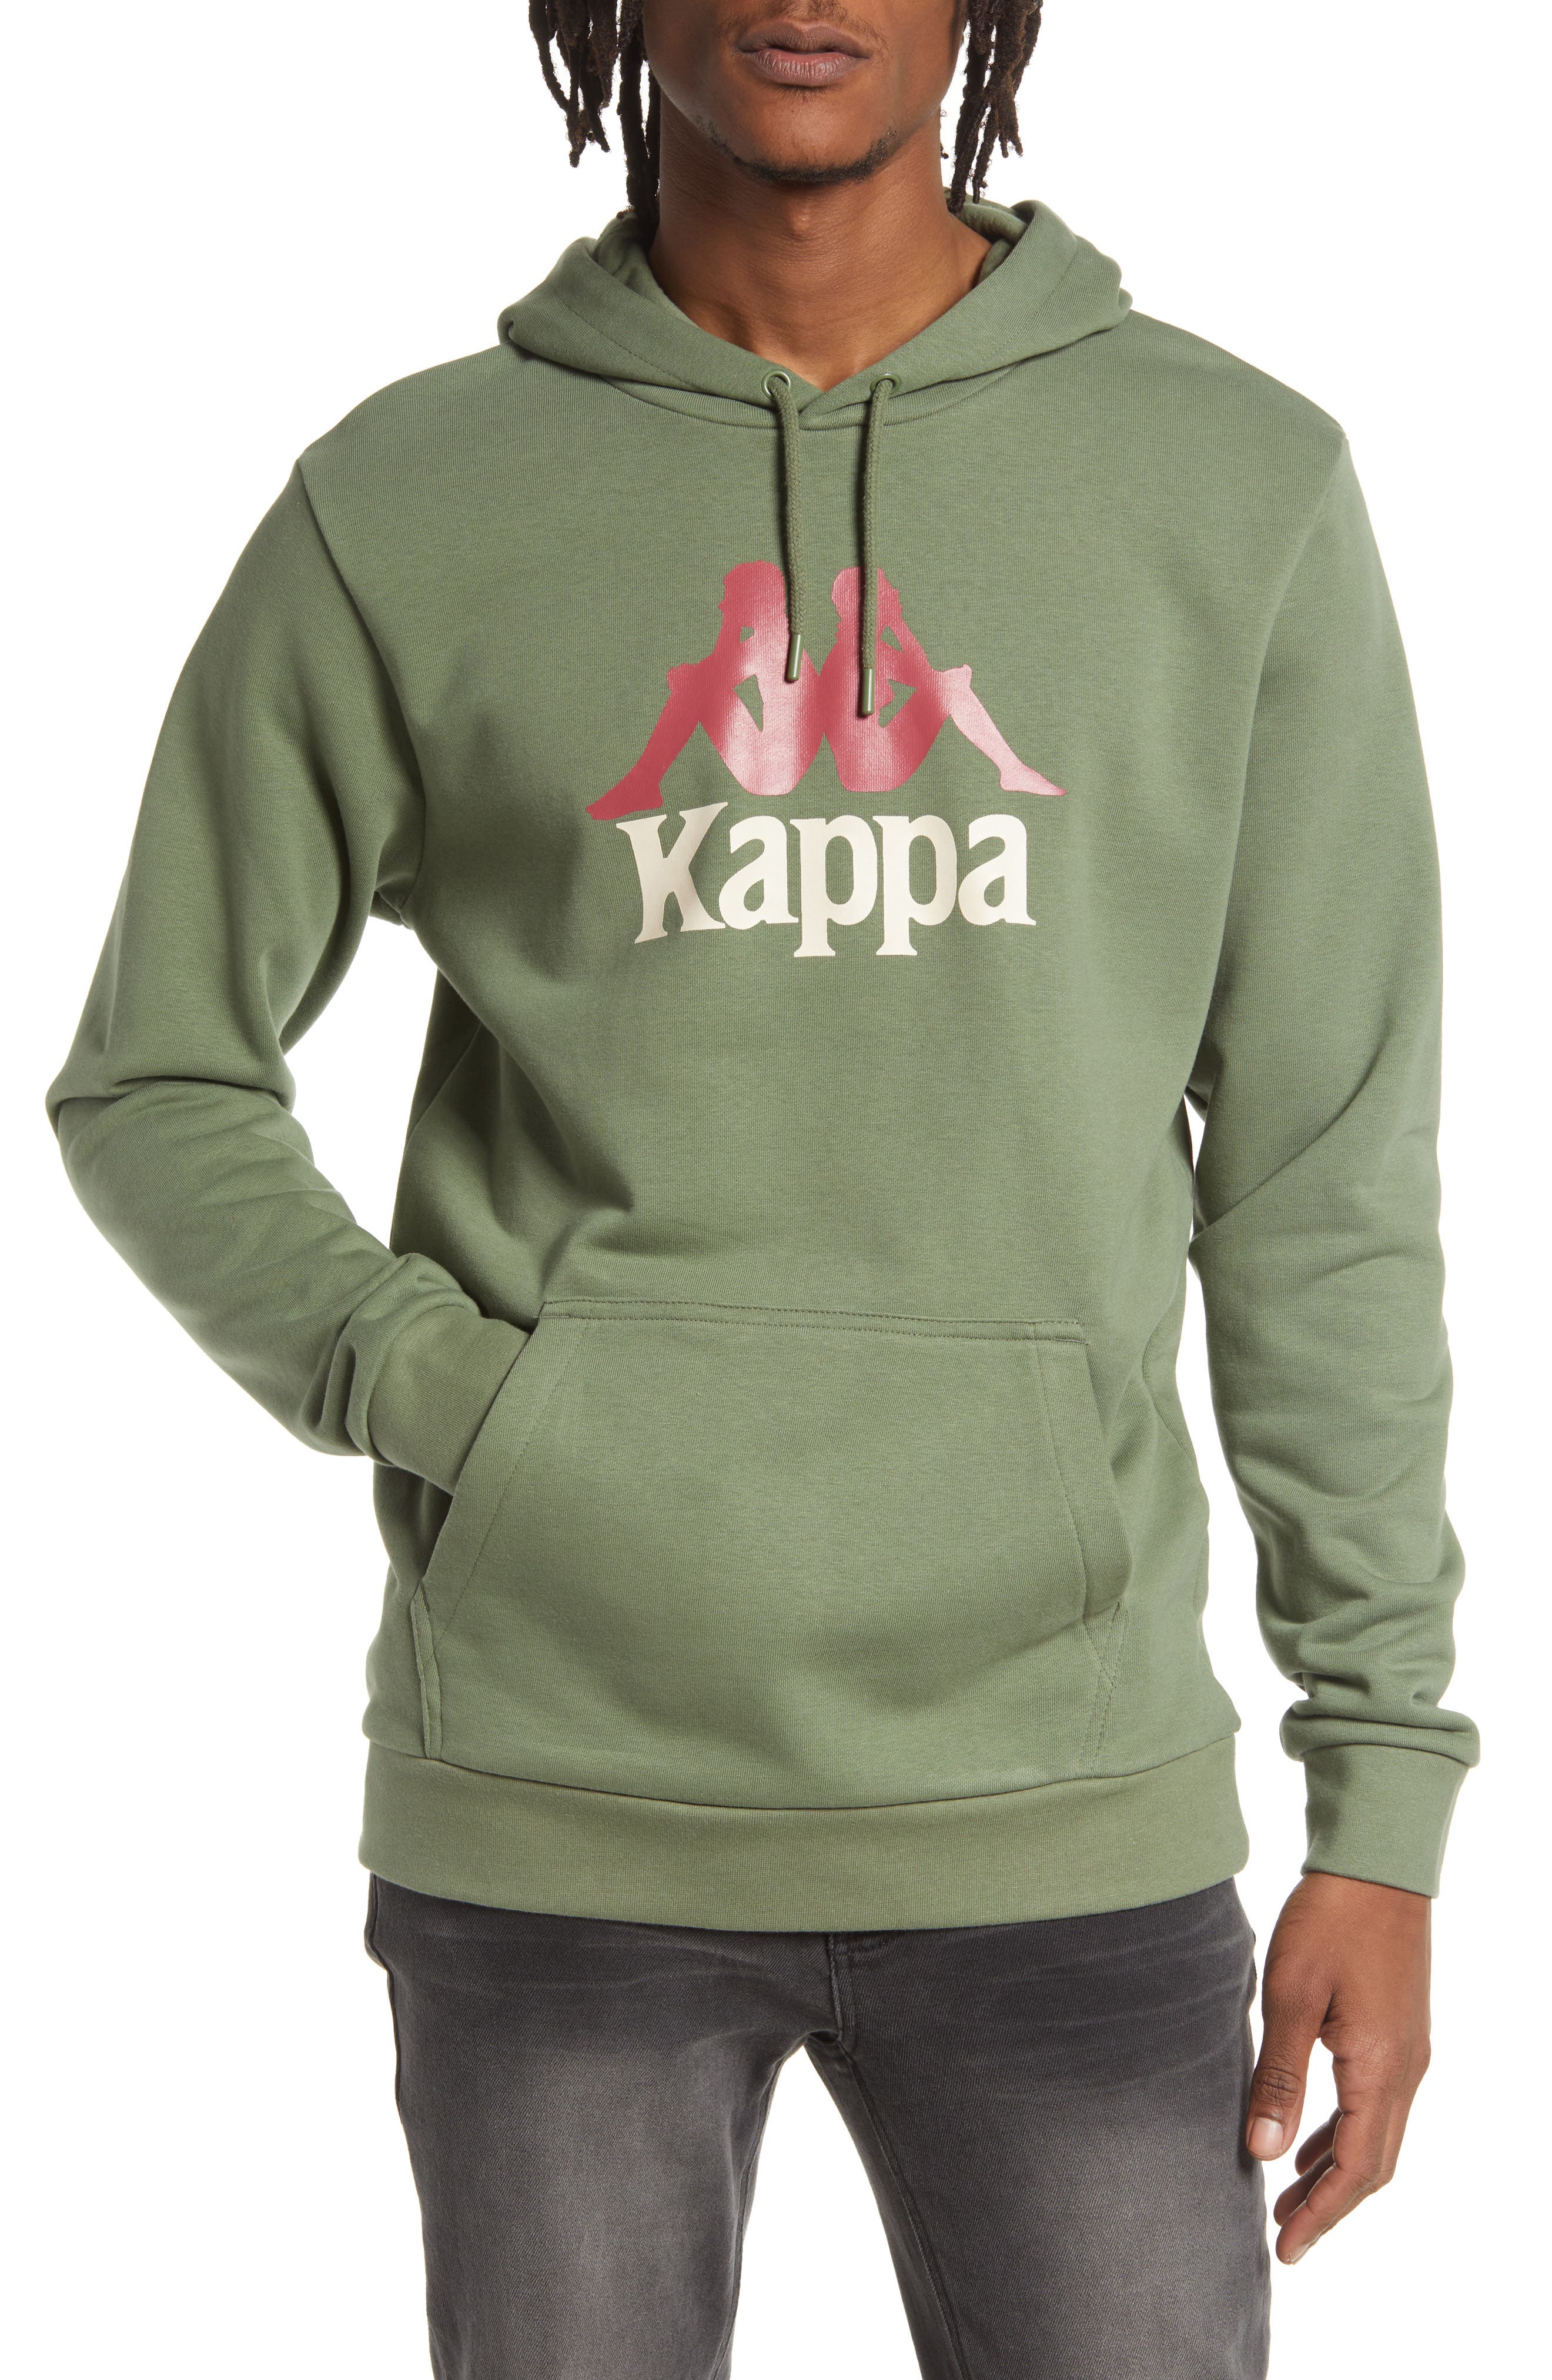 Kappa Arlton 222 Banda Sweatshirt in White & Red jumper 80s 90s crew sweat 